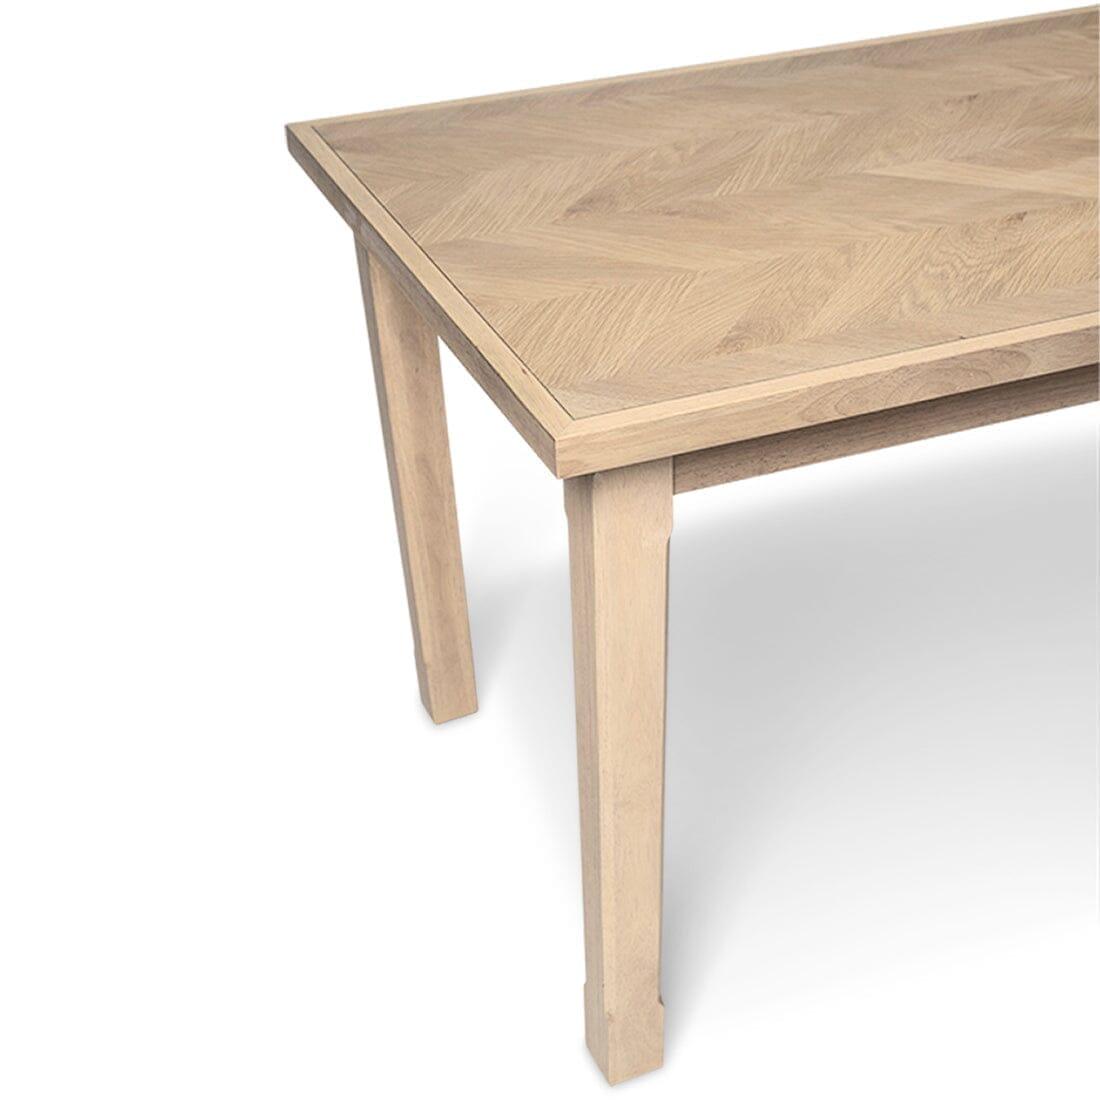 Ella Pale Oak Dining Table Set - 6 Seater - Freya Grey Dining Chairs - 160cm